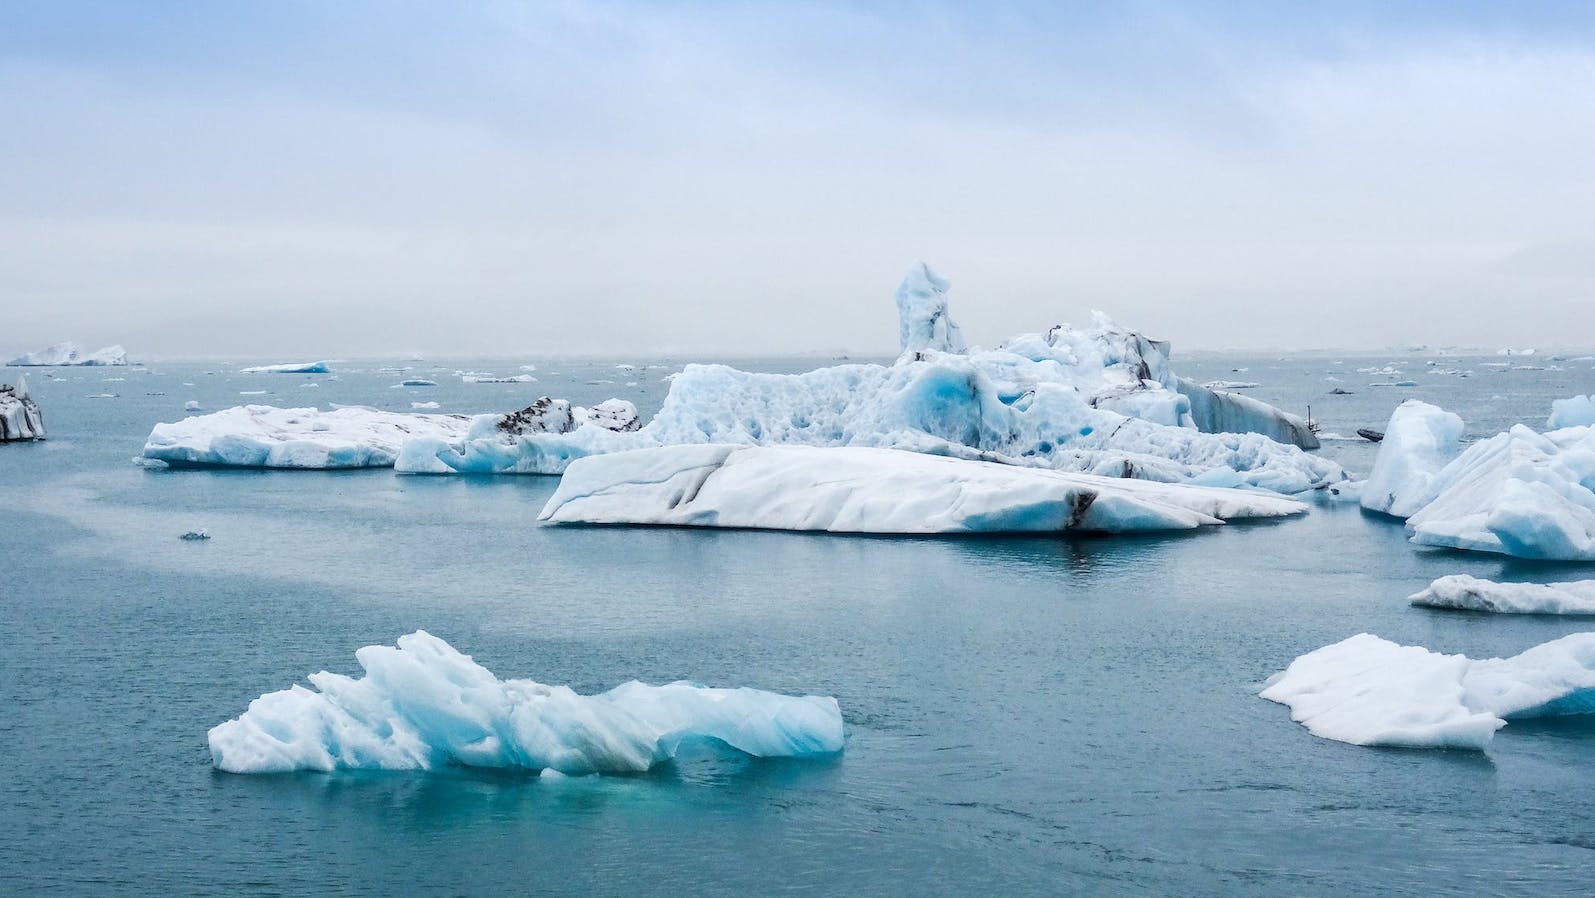 Icebergs in the ocean under a blue sky